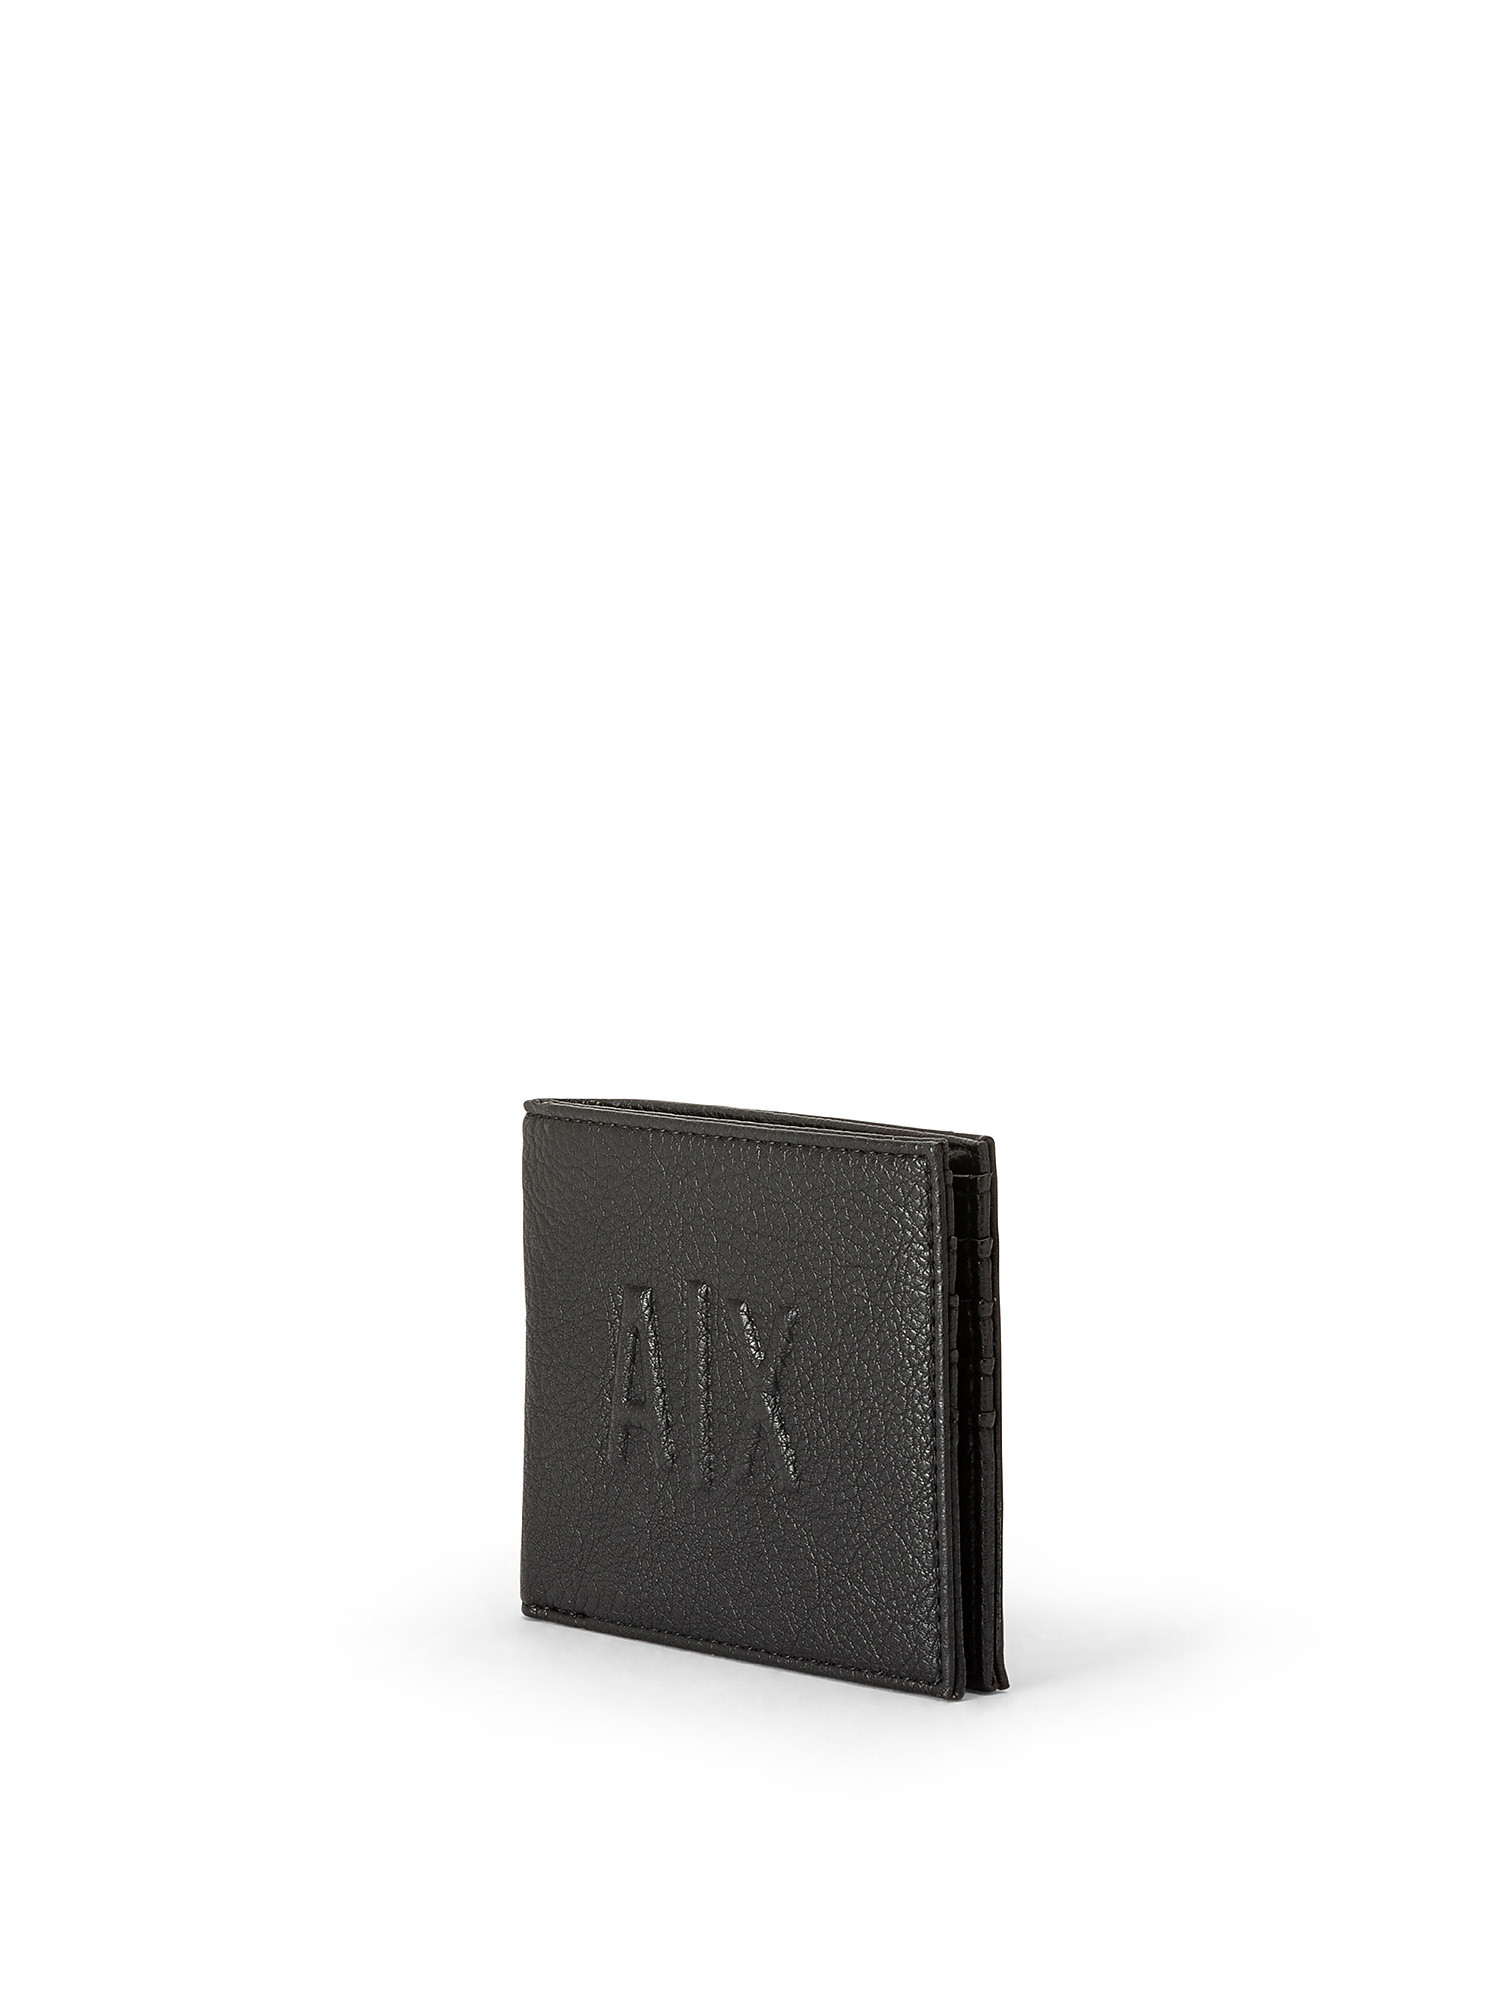 Armani Exchange - Wallet with logo, Black, large image number 1